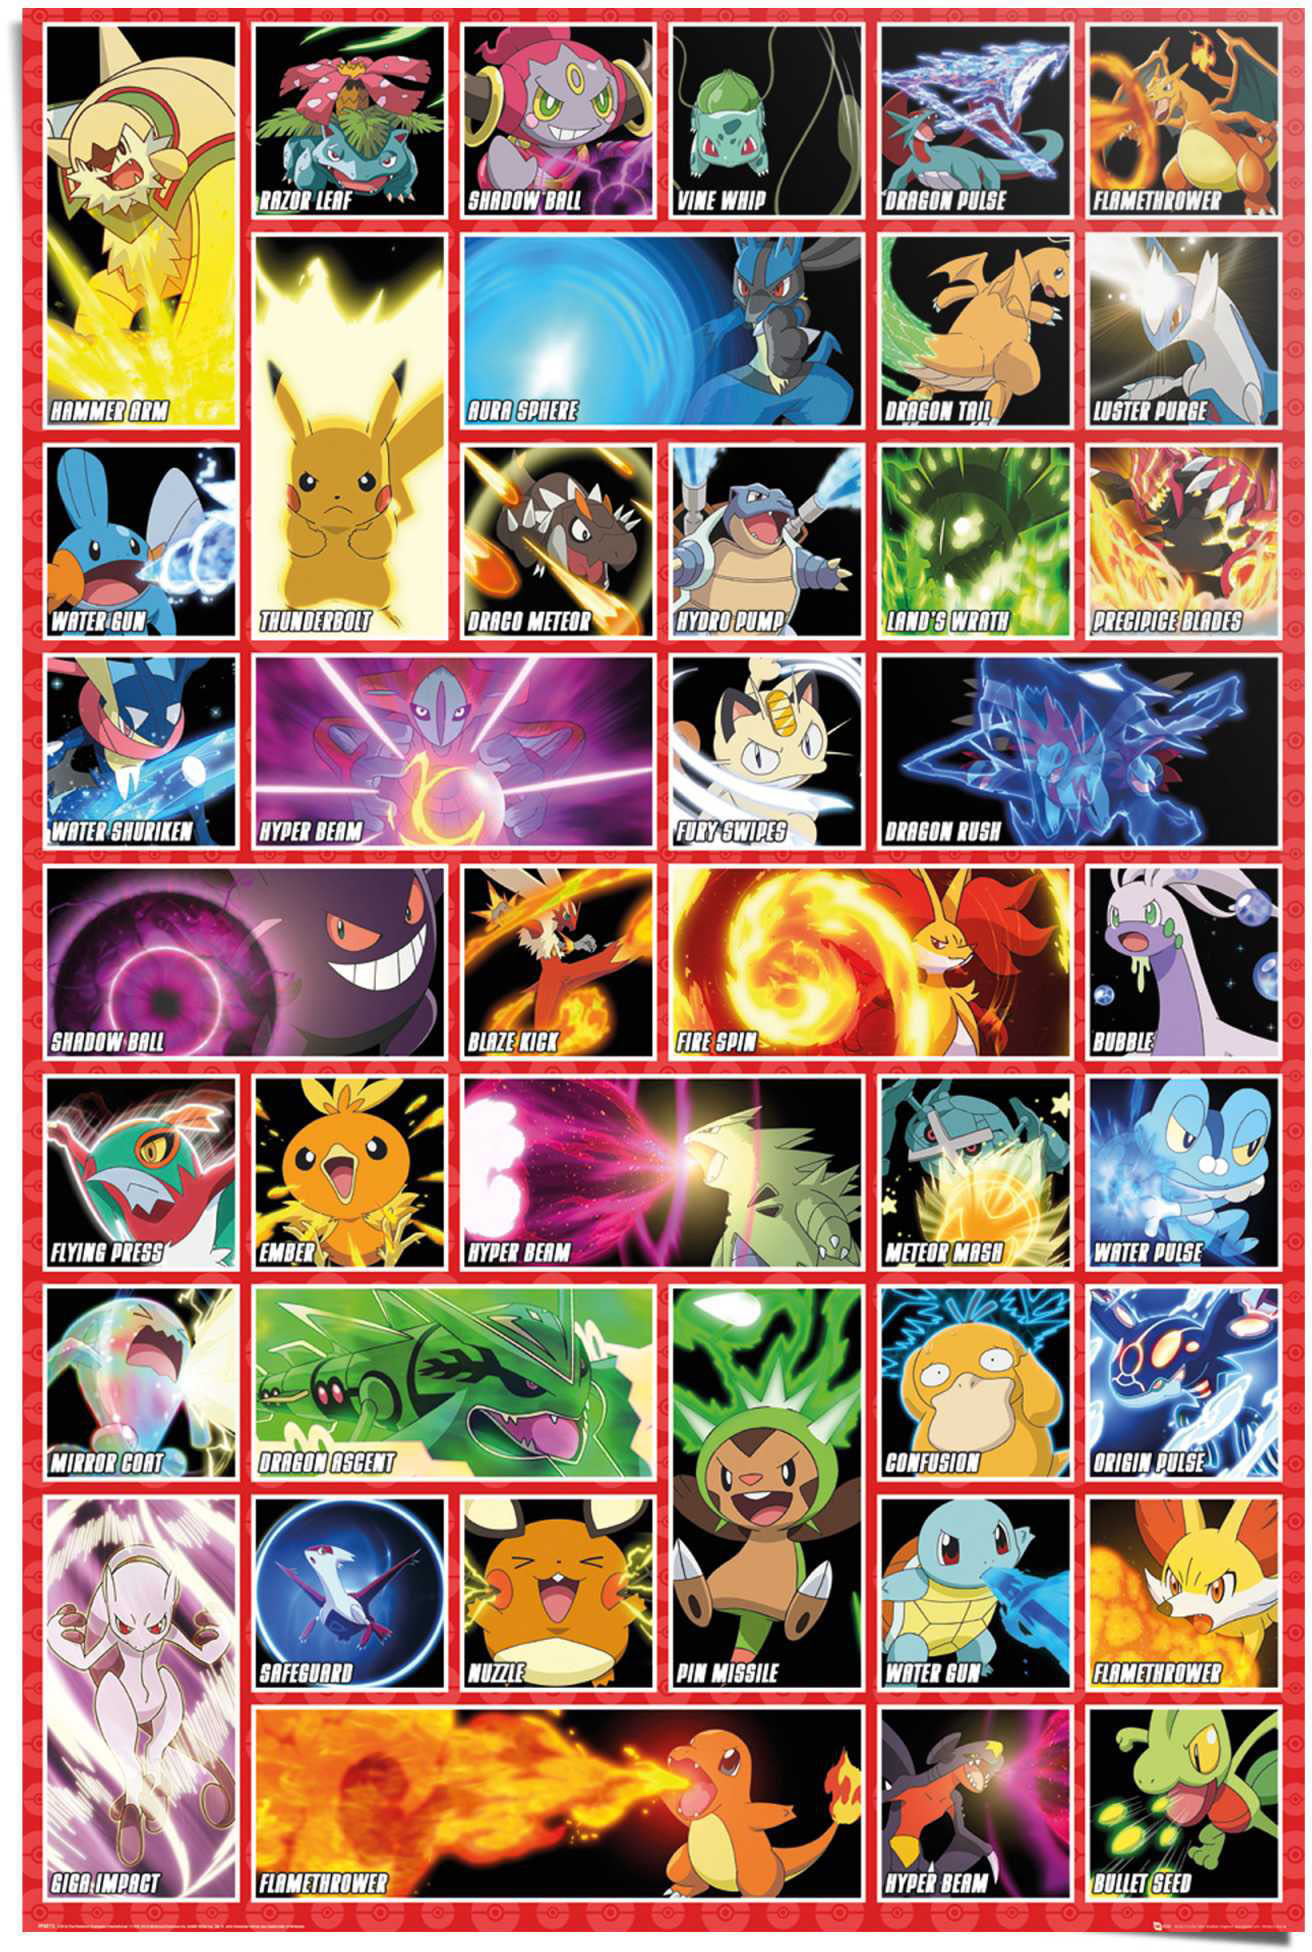 Reinders! Poster »Poster auf St.) bestellen Comic, Pokemon«, Raten (1